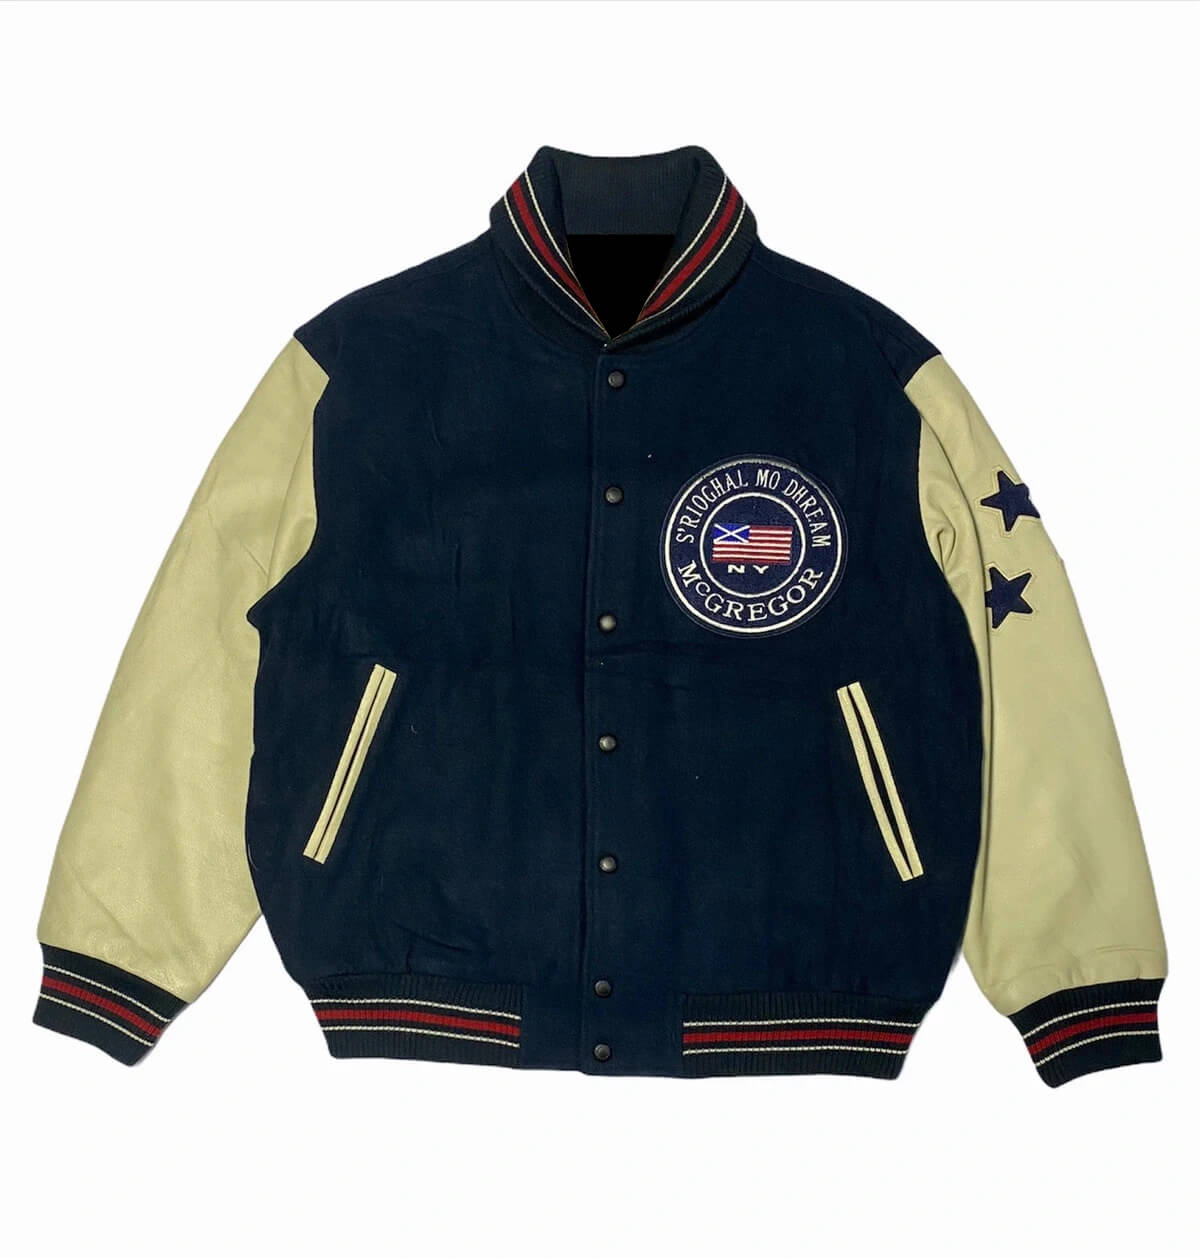 Maker of Jacket Vintage Varsity Jacket